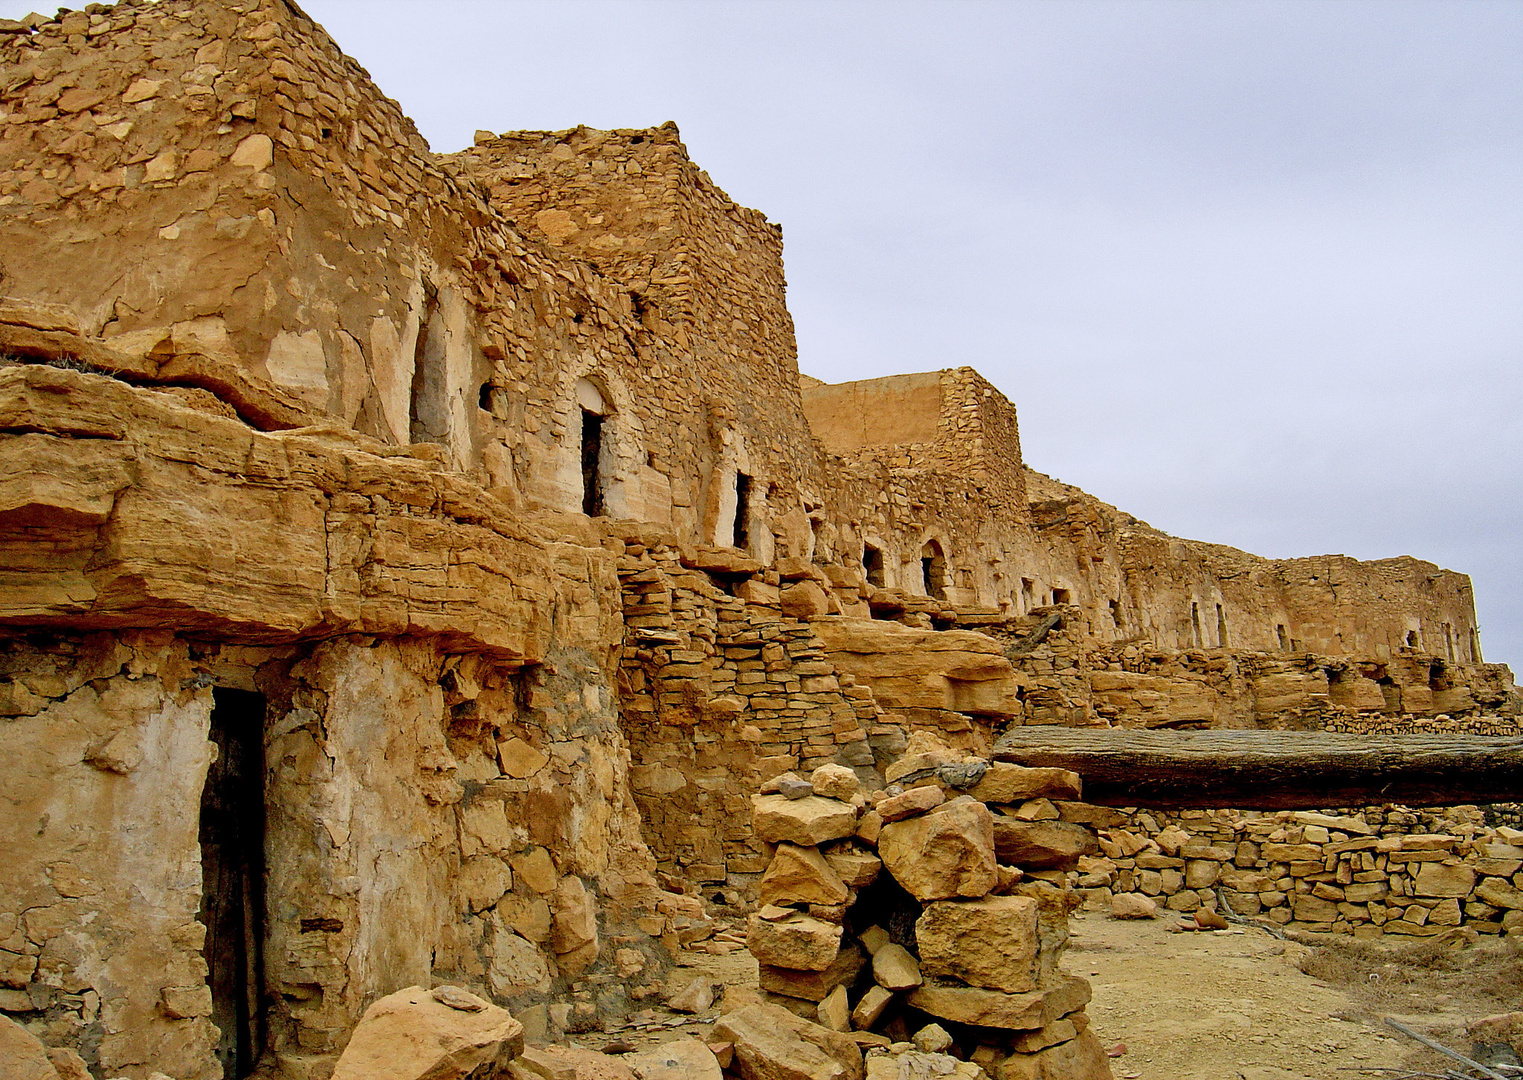 Le village Berbère en ruines de Guermassa